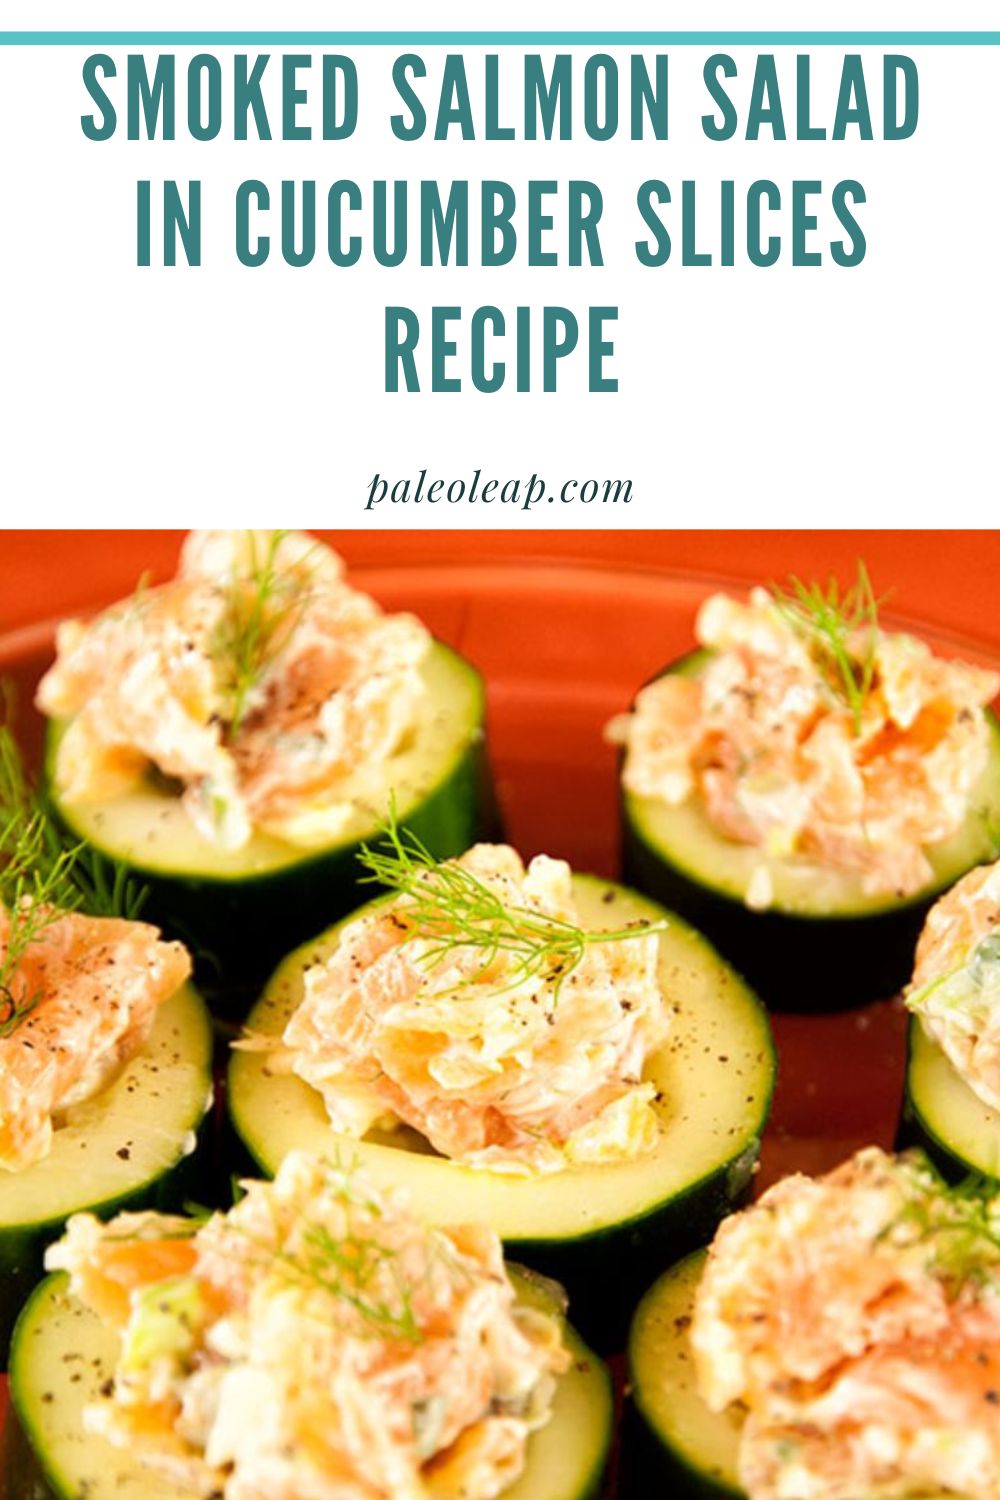 Smoked Salmon Salad on Cucumber Slices Recipe | Paleo Leap